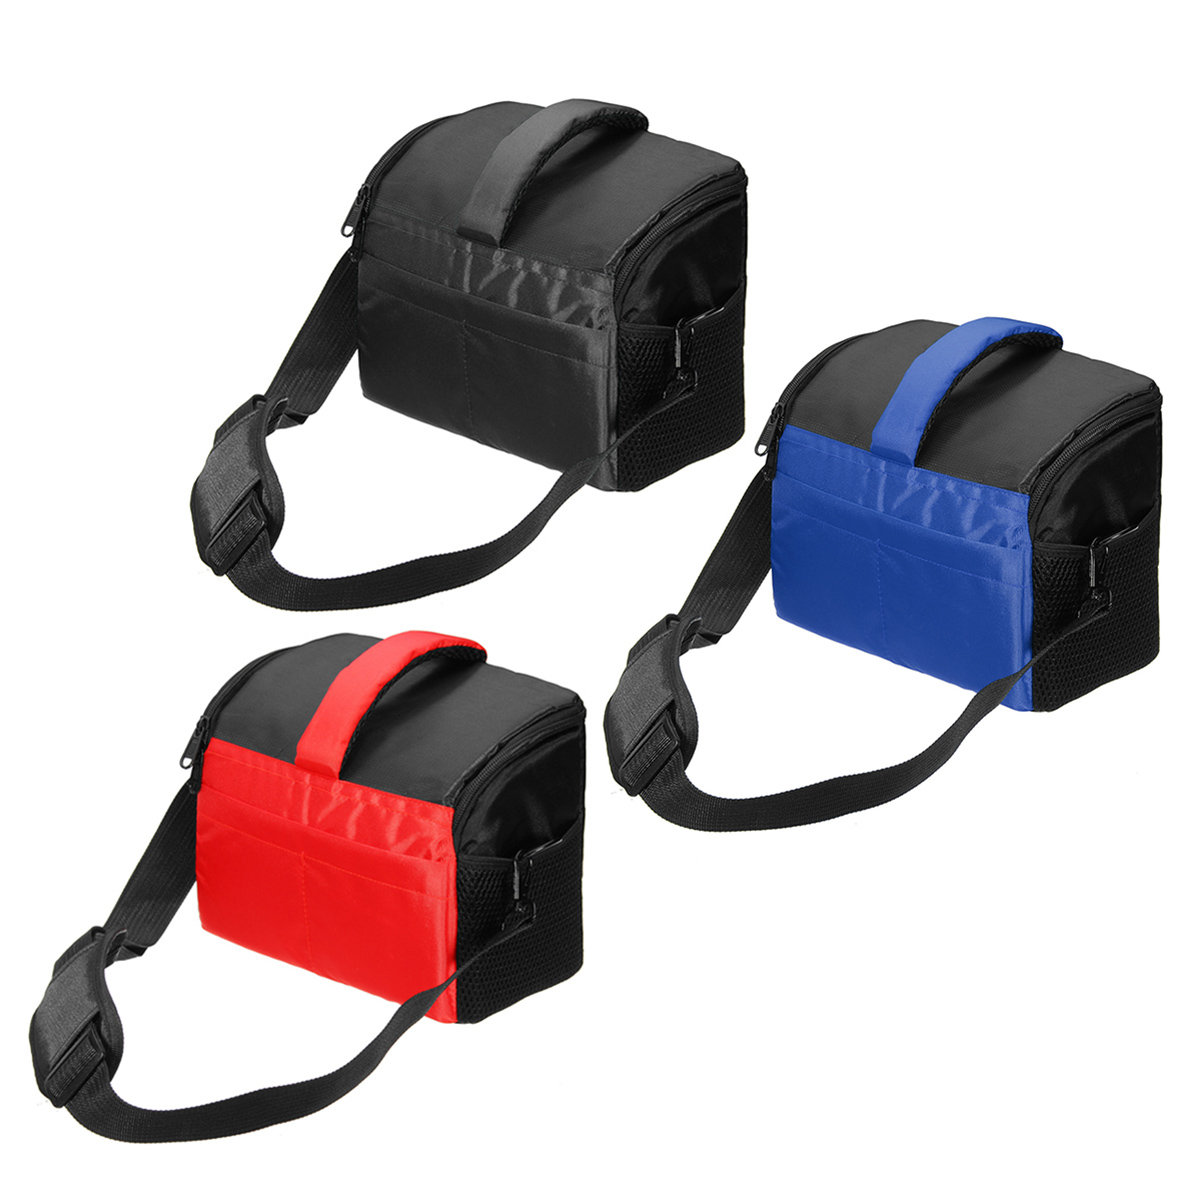 

Universal Portable Digital Camera Case Bag, Red blue black